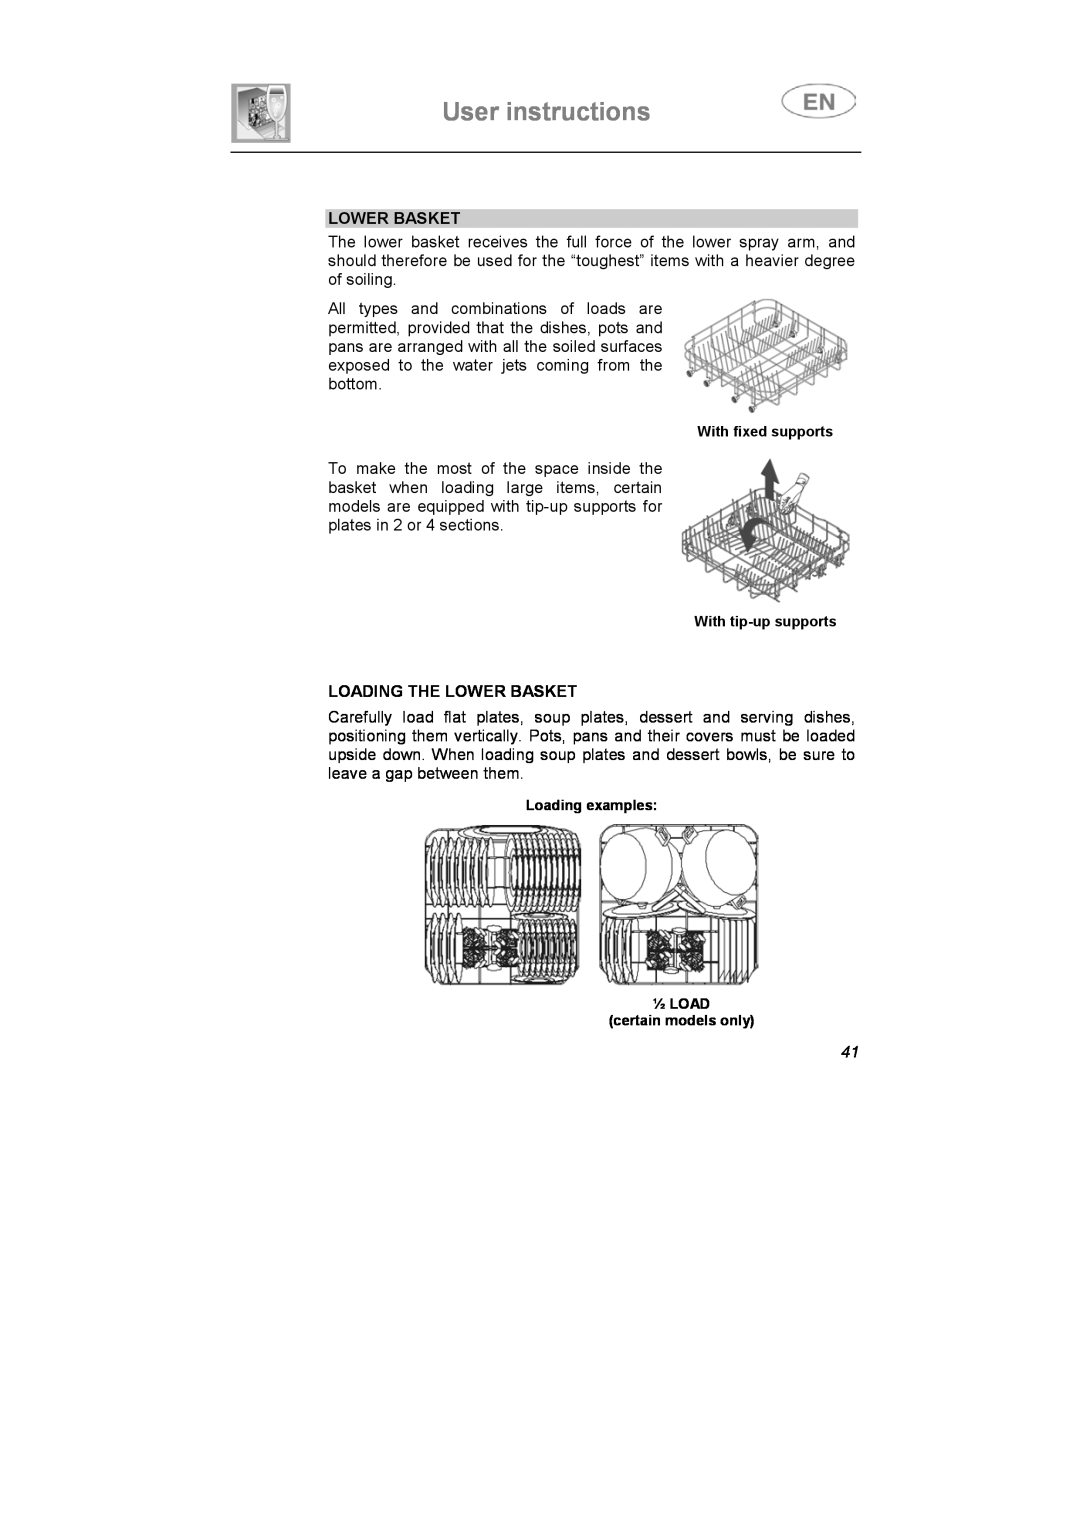 Smeg LSA6047X instruction manual Loading The Lower Basket, User instructions 